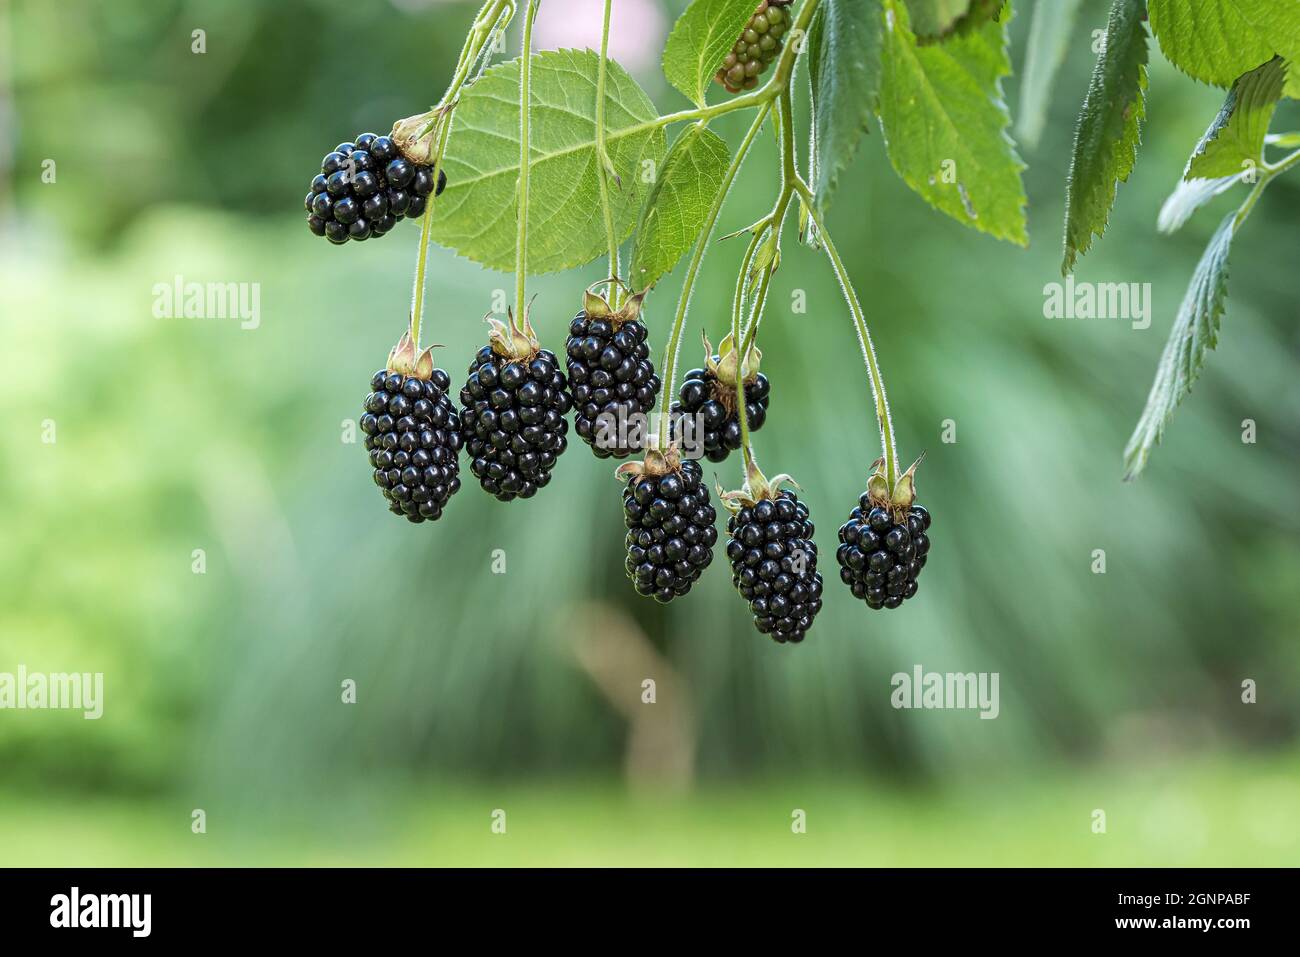 blackberry Baby Cakes (Rubus fruticosus 'Baby Cakes', Rubus fruticosus Baby Cakes), blackberries on a branch, cultivar Baby Cakes Stock Photo